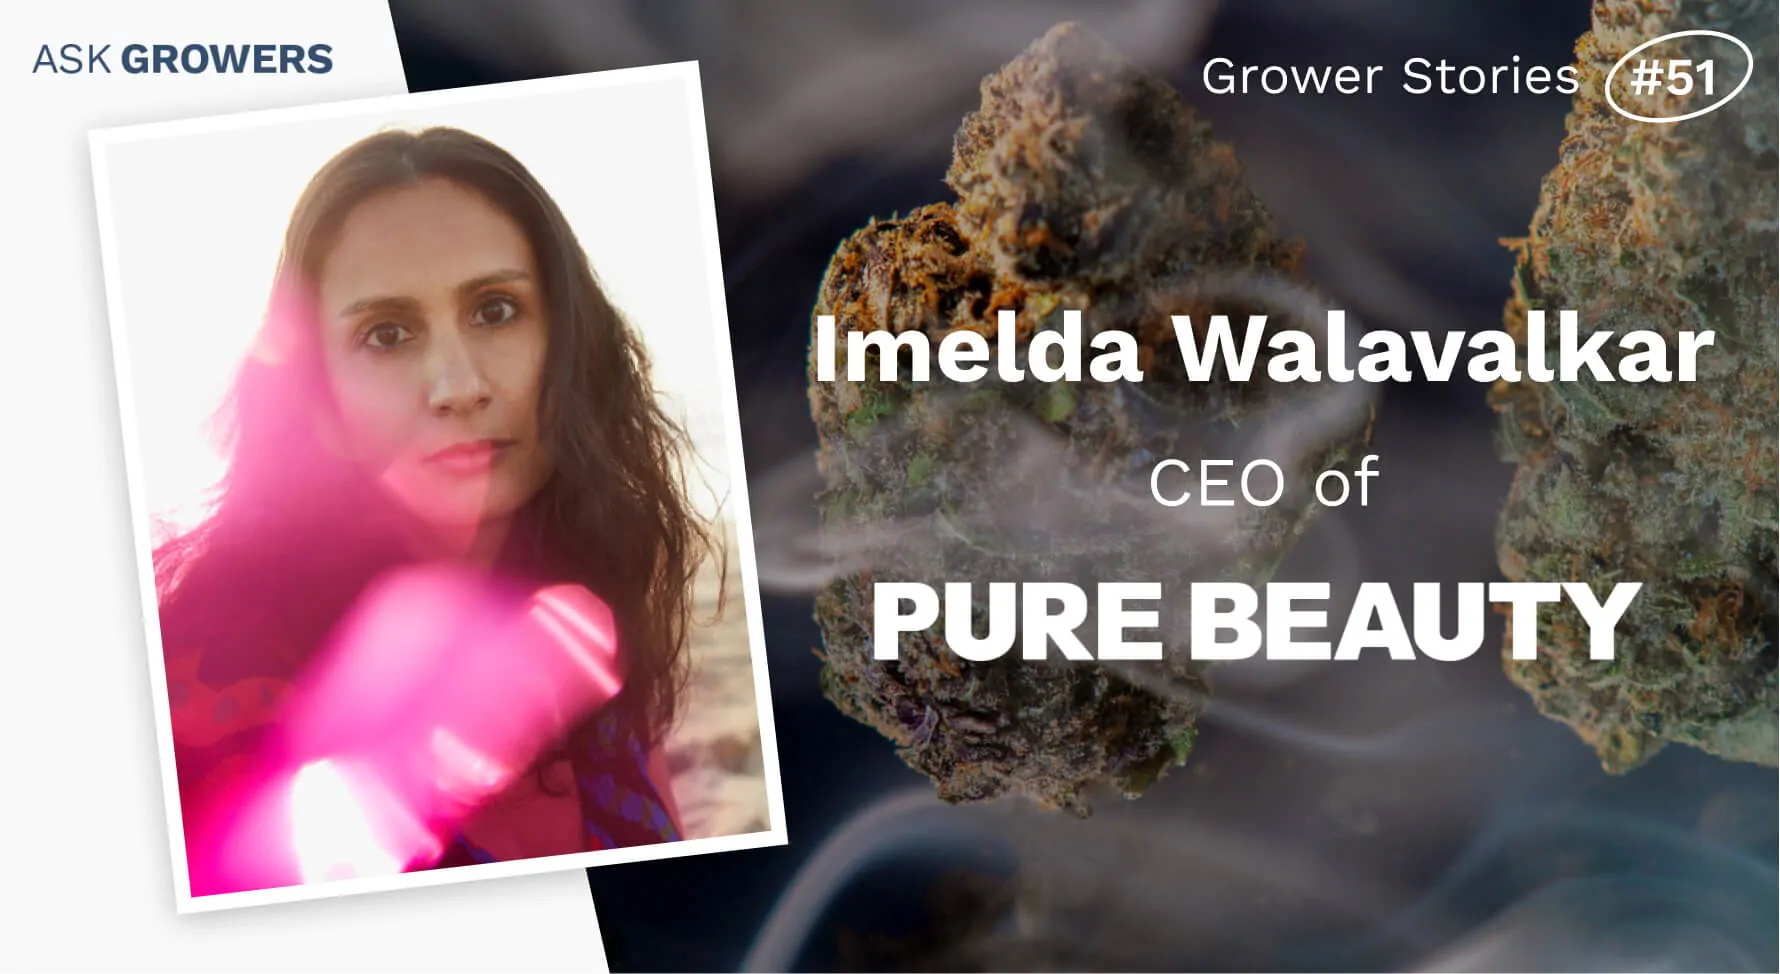 Grower Stories #51: Imelda Walavalkar